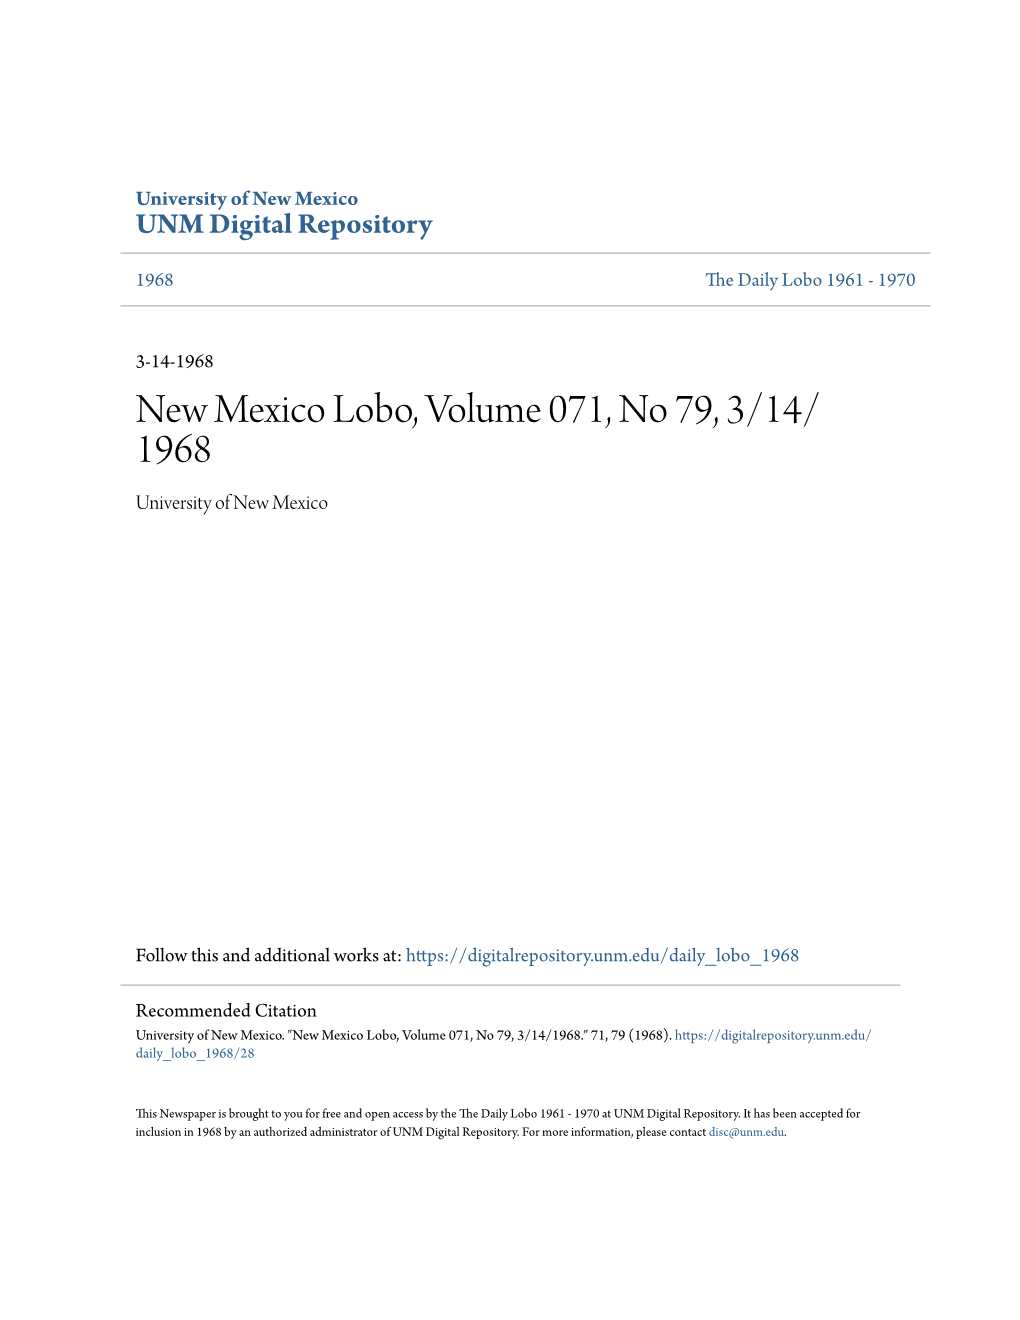 New Mexico Lobo, Volume 071, No 79, 3/14/1968." 71, 79 (1968)